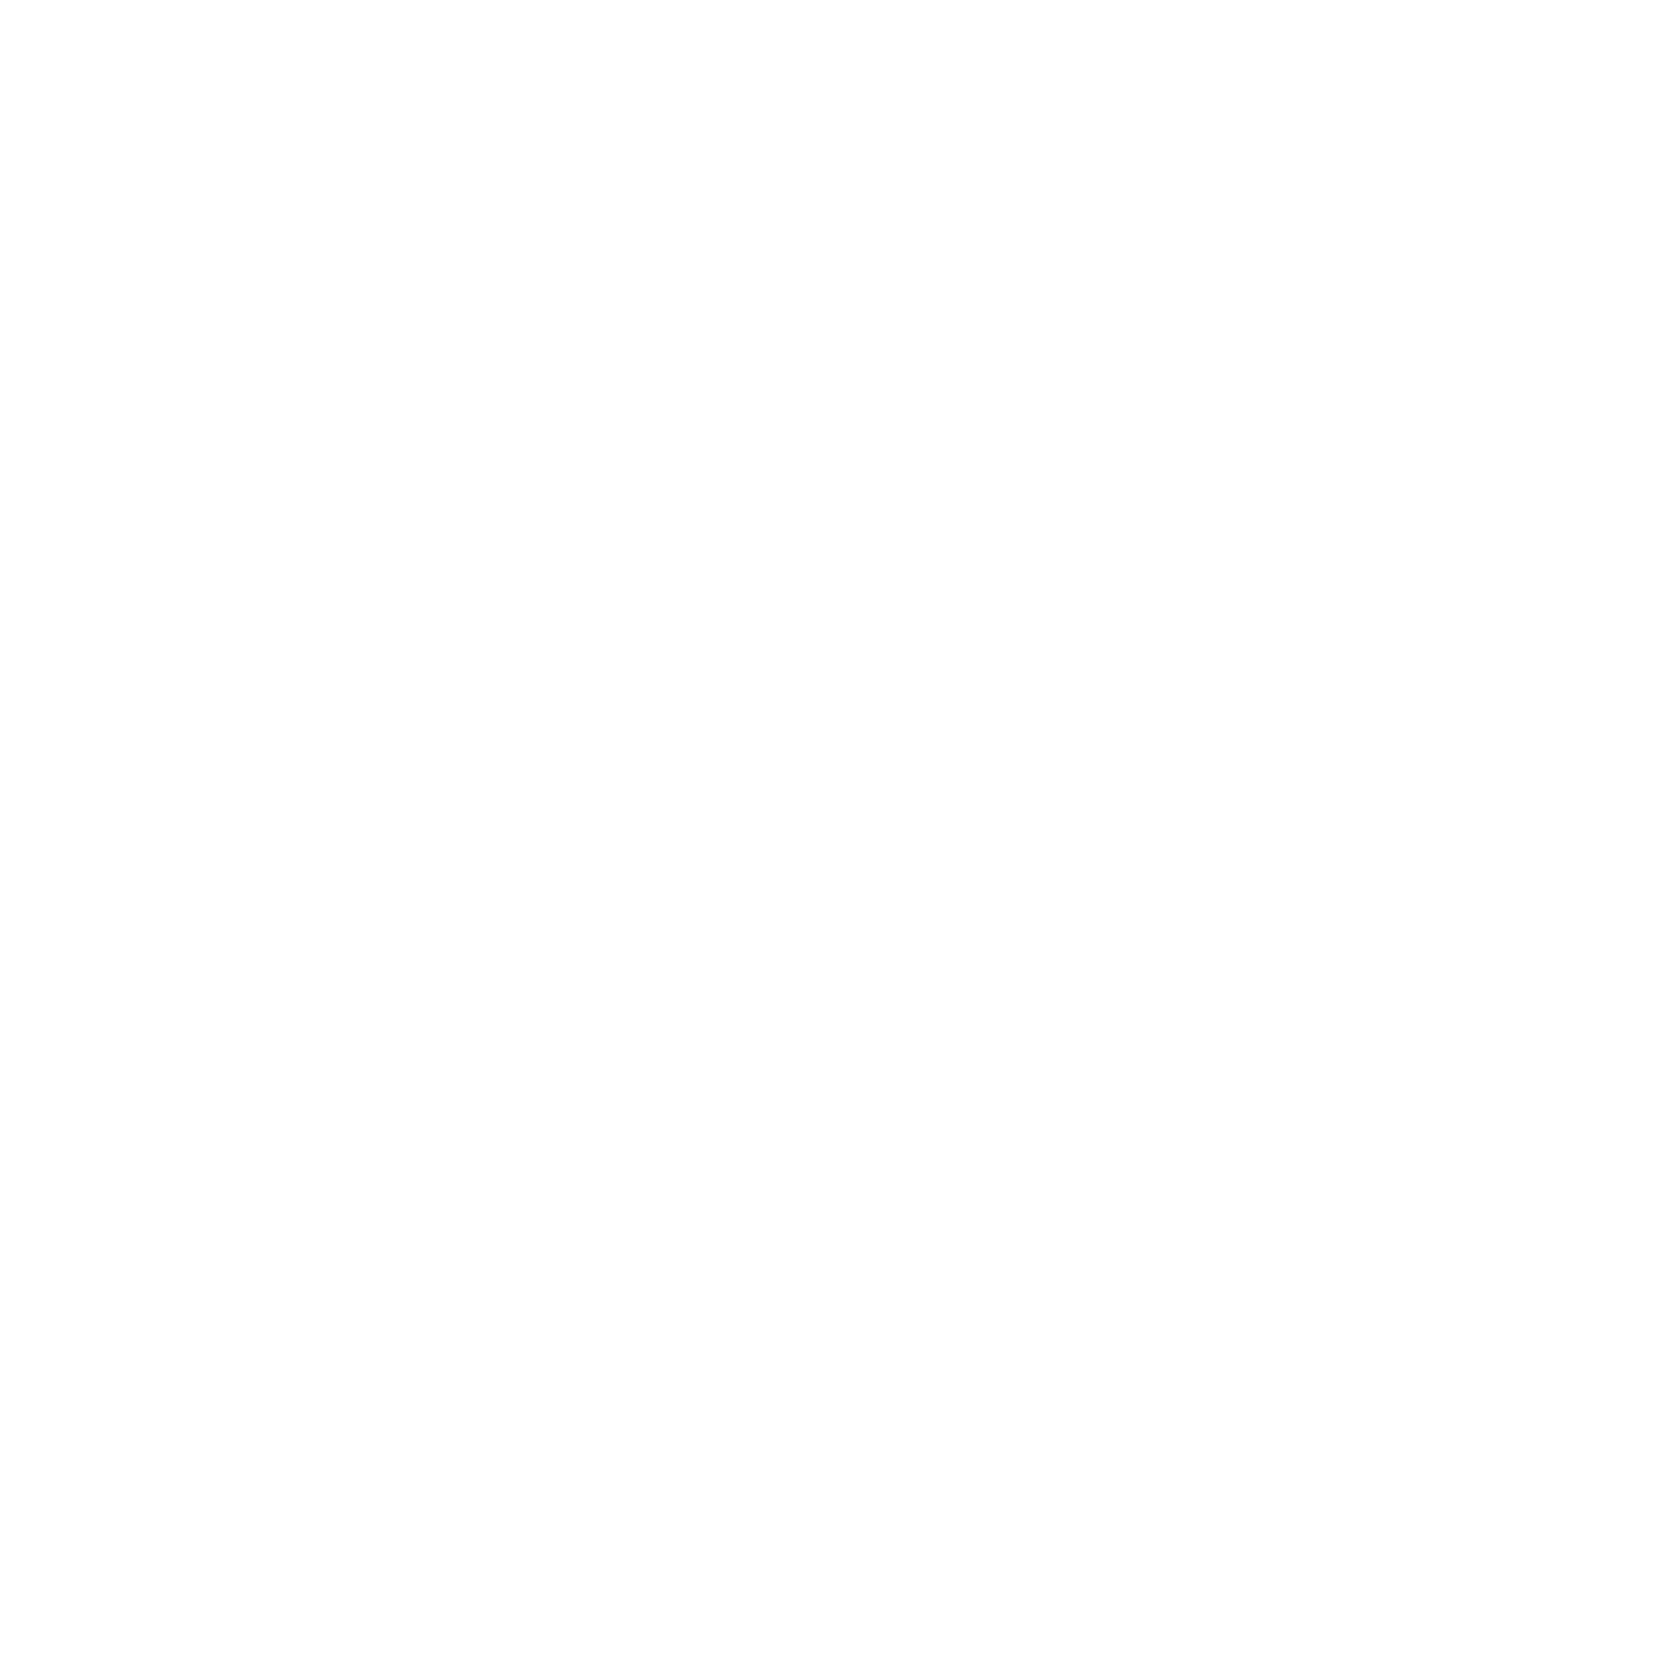 p3k-nabytok-petrik-logo-web